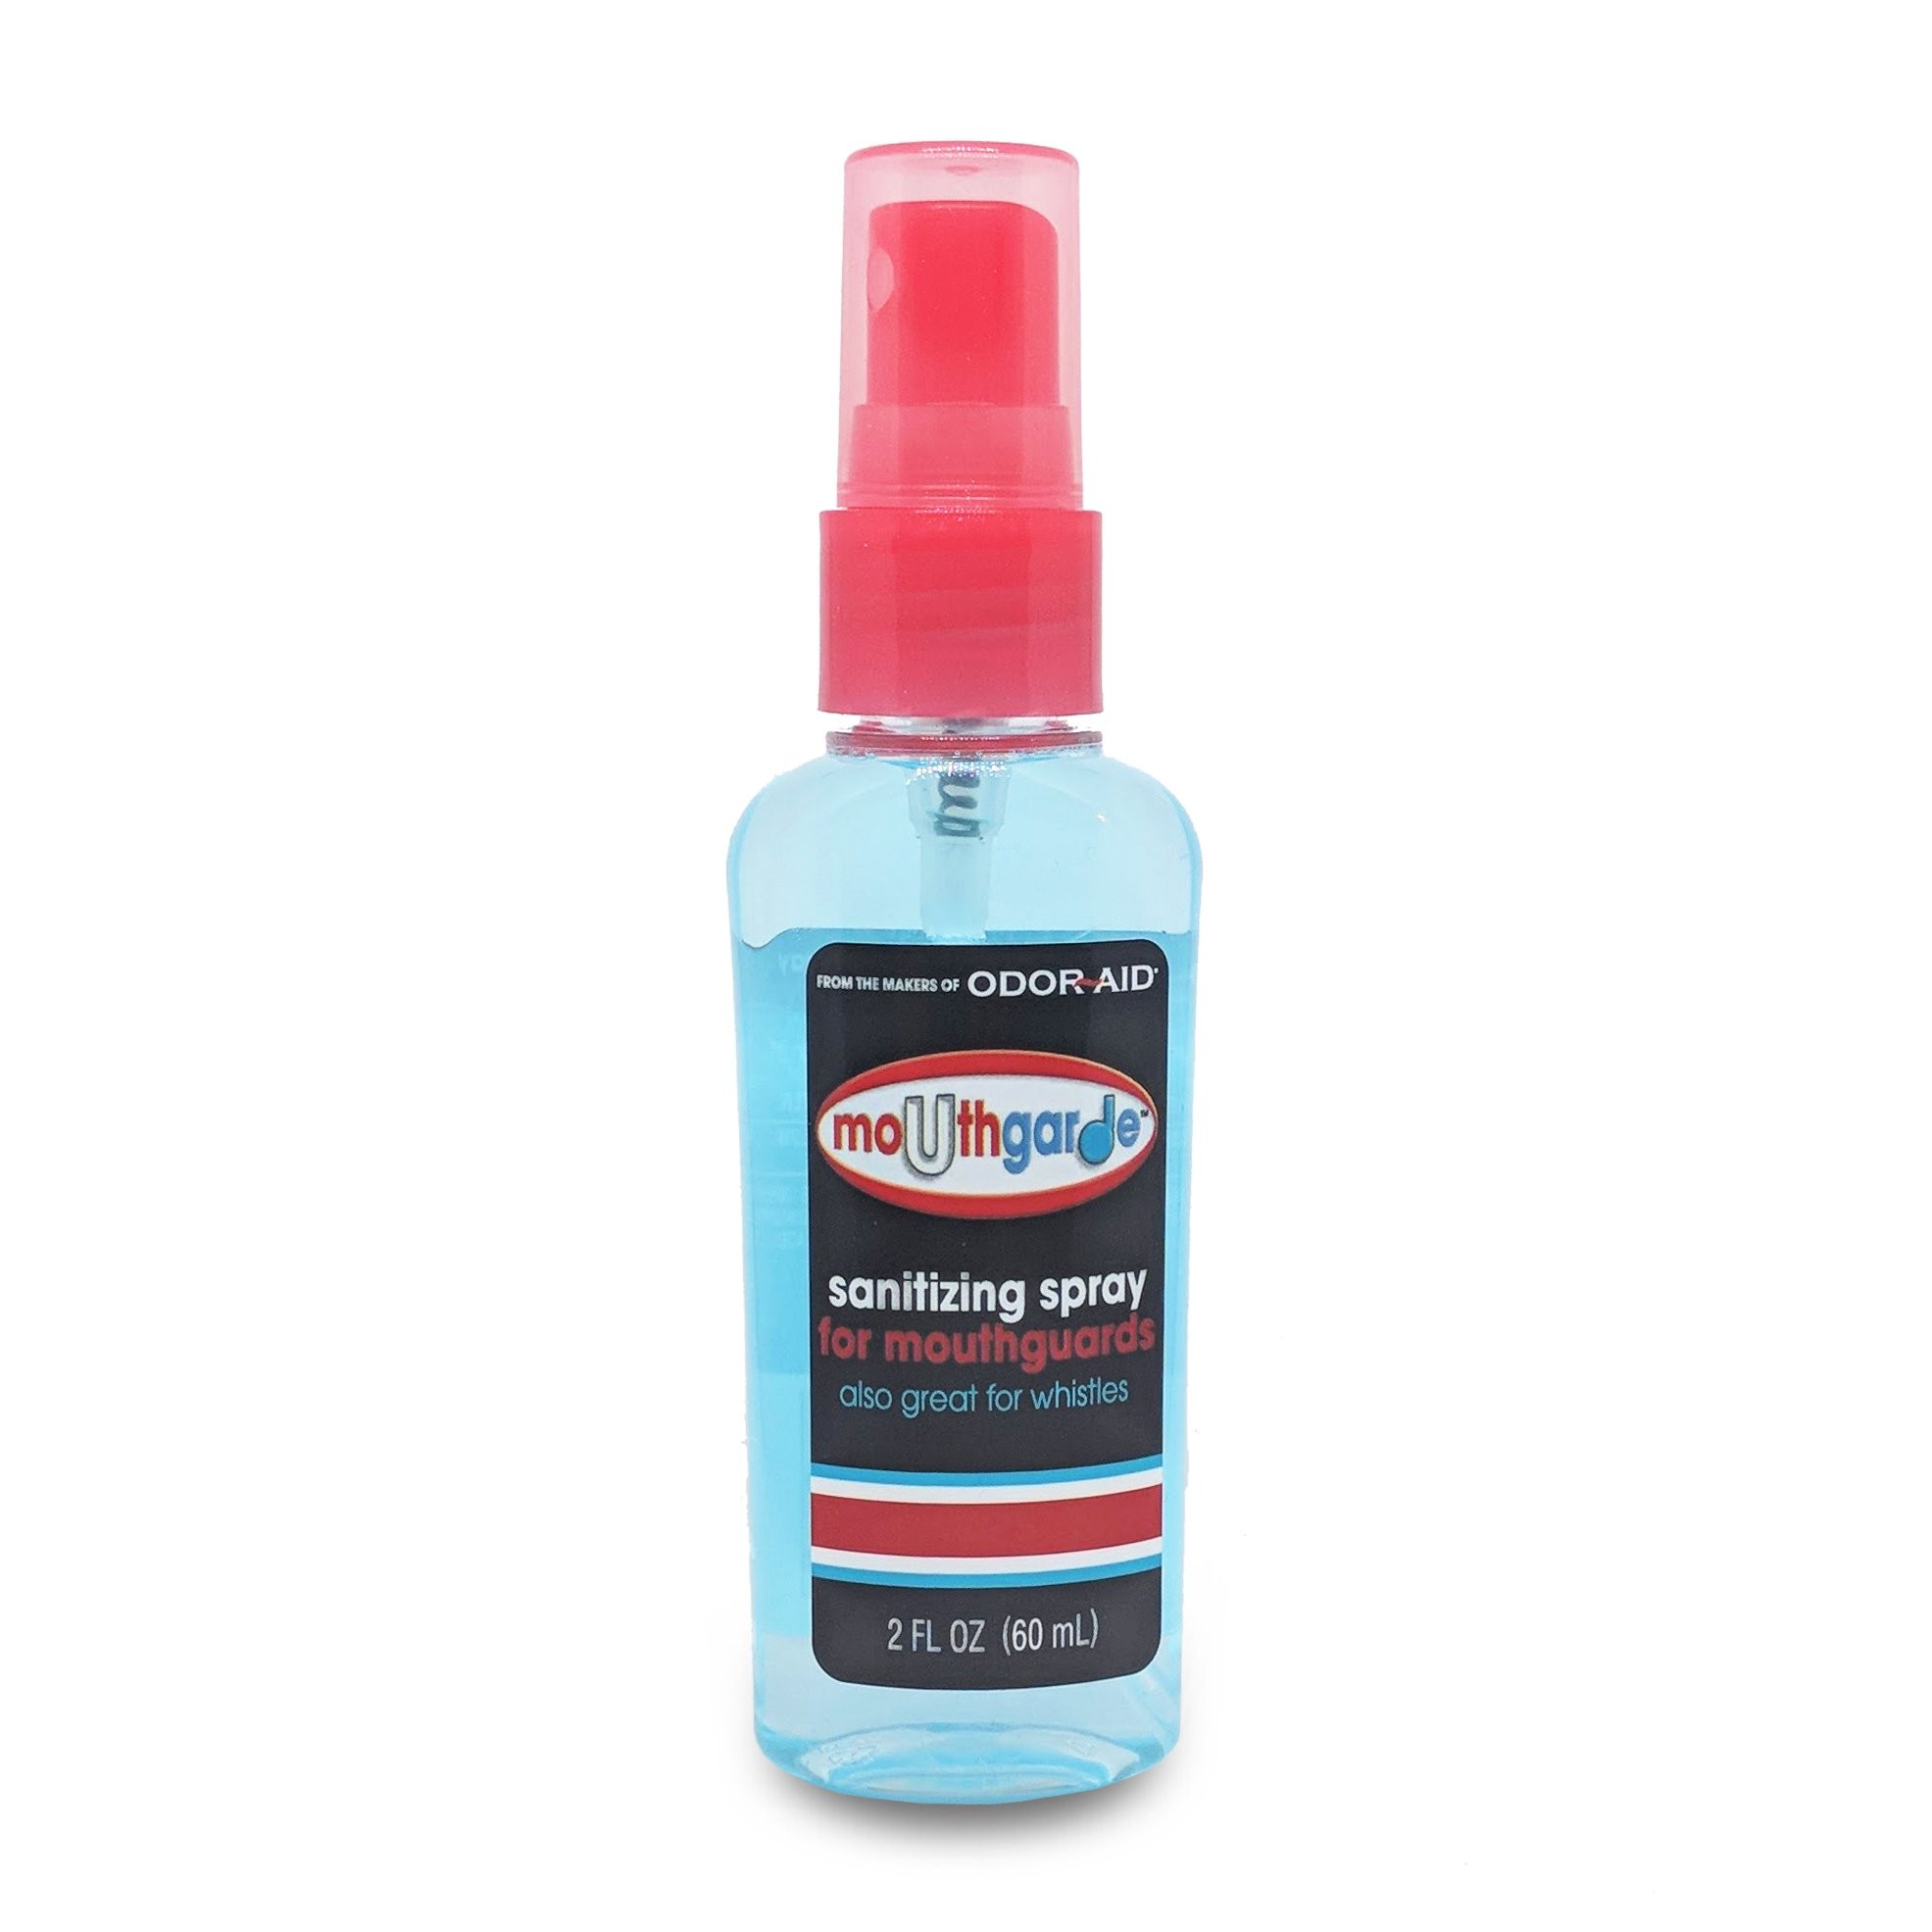 ODOR AID Sanitizing Spray For Mouthguard